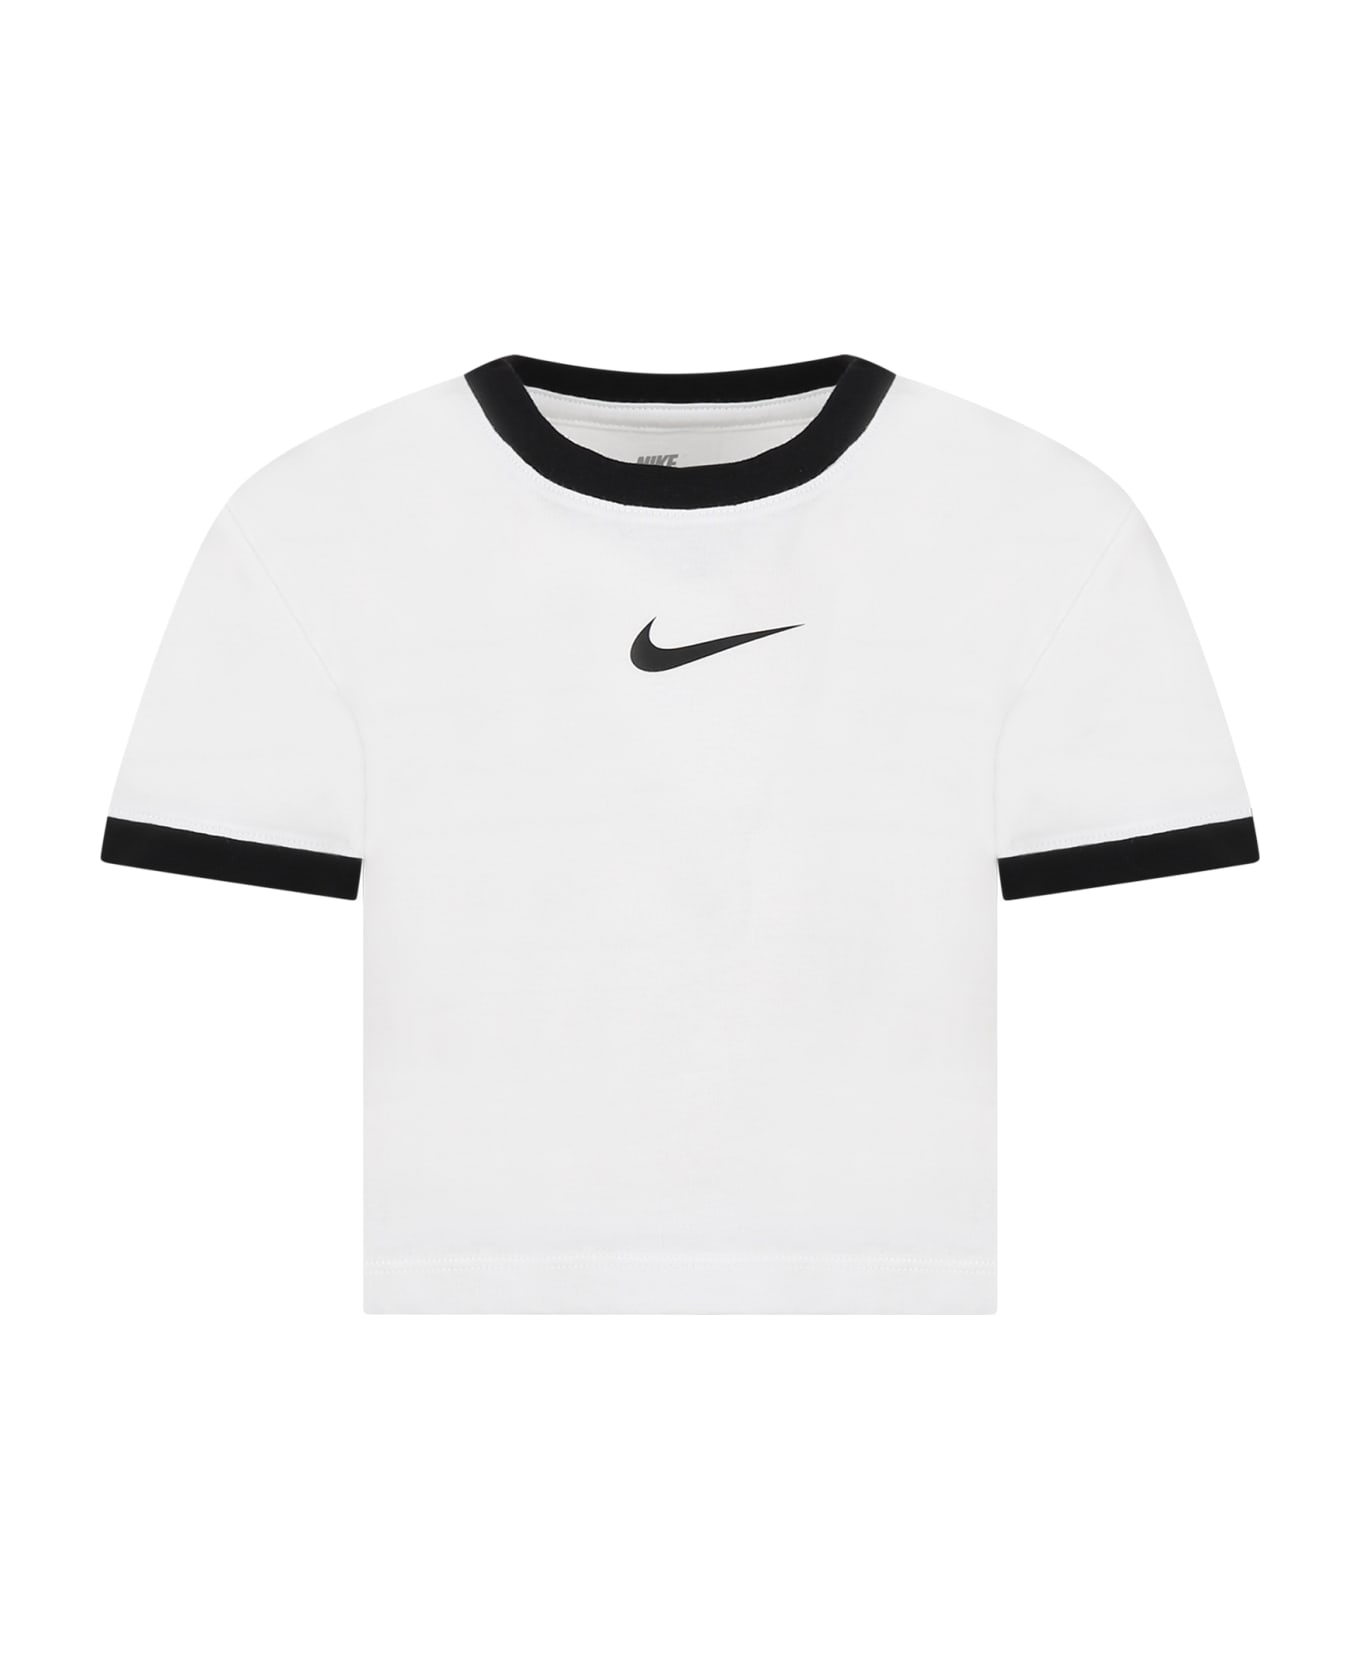 Nike White T-shirt For Girl With Logo - White